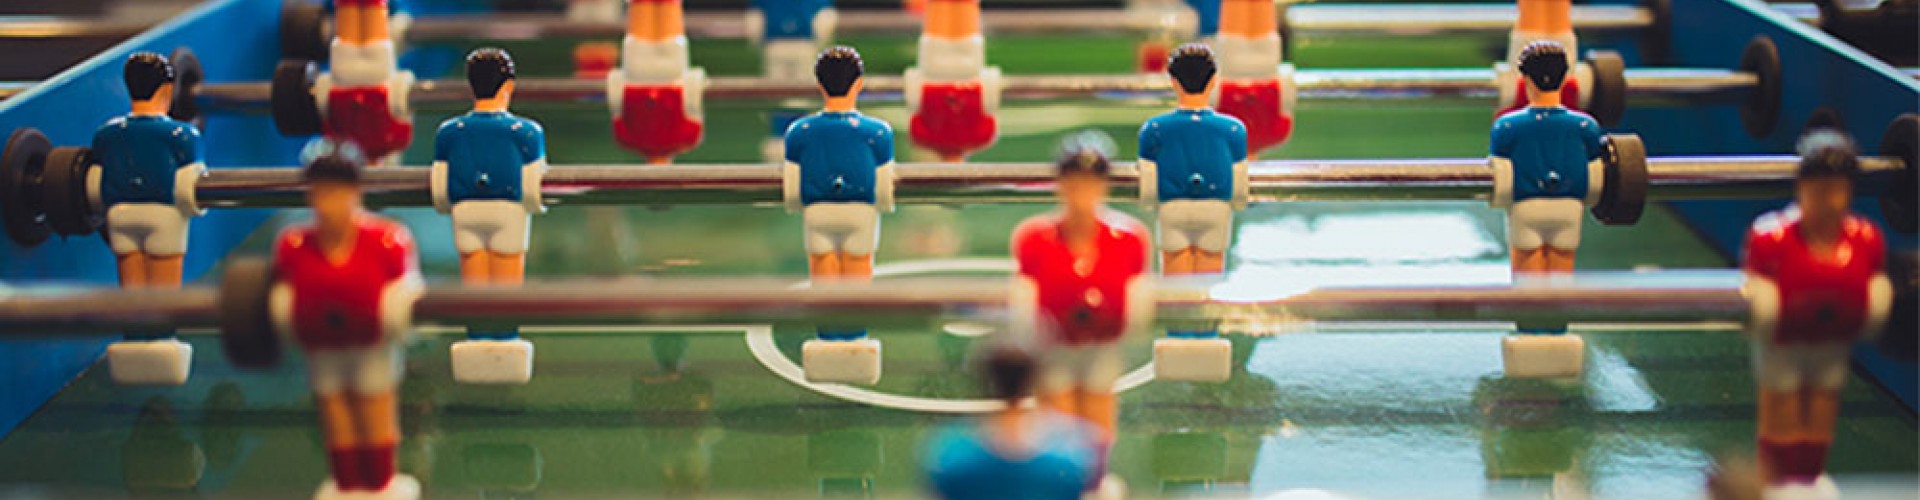 table football figures